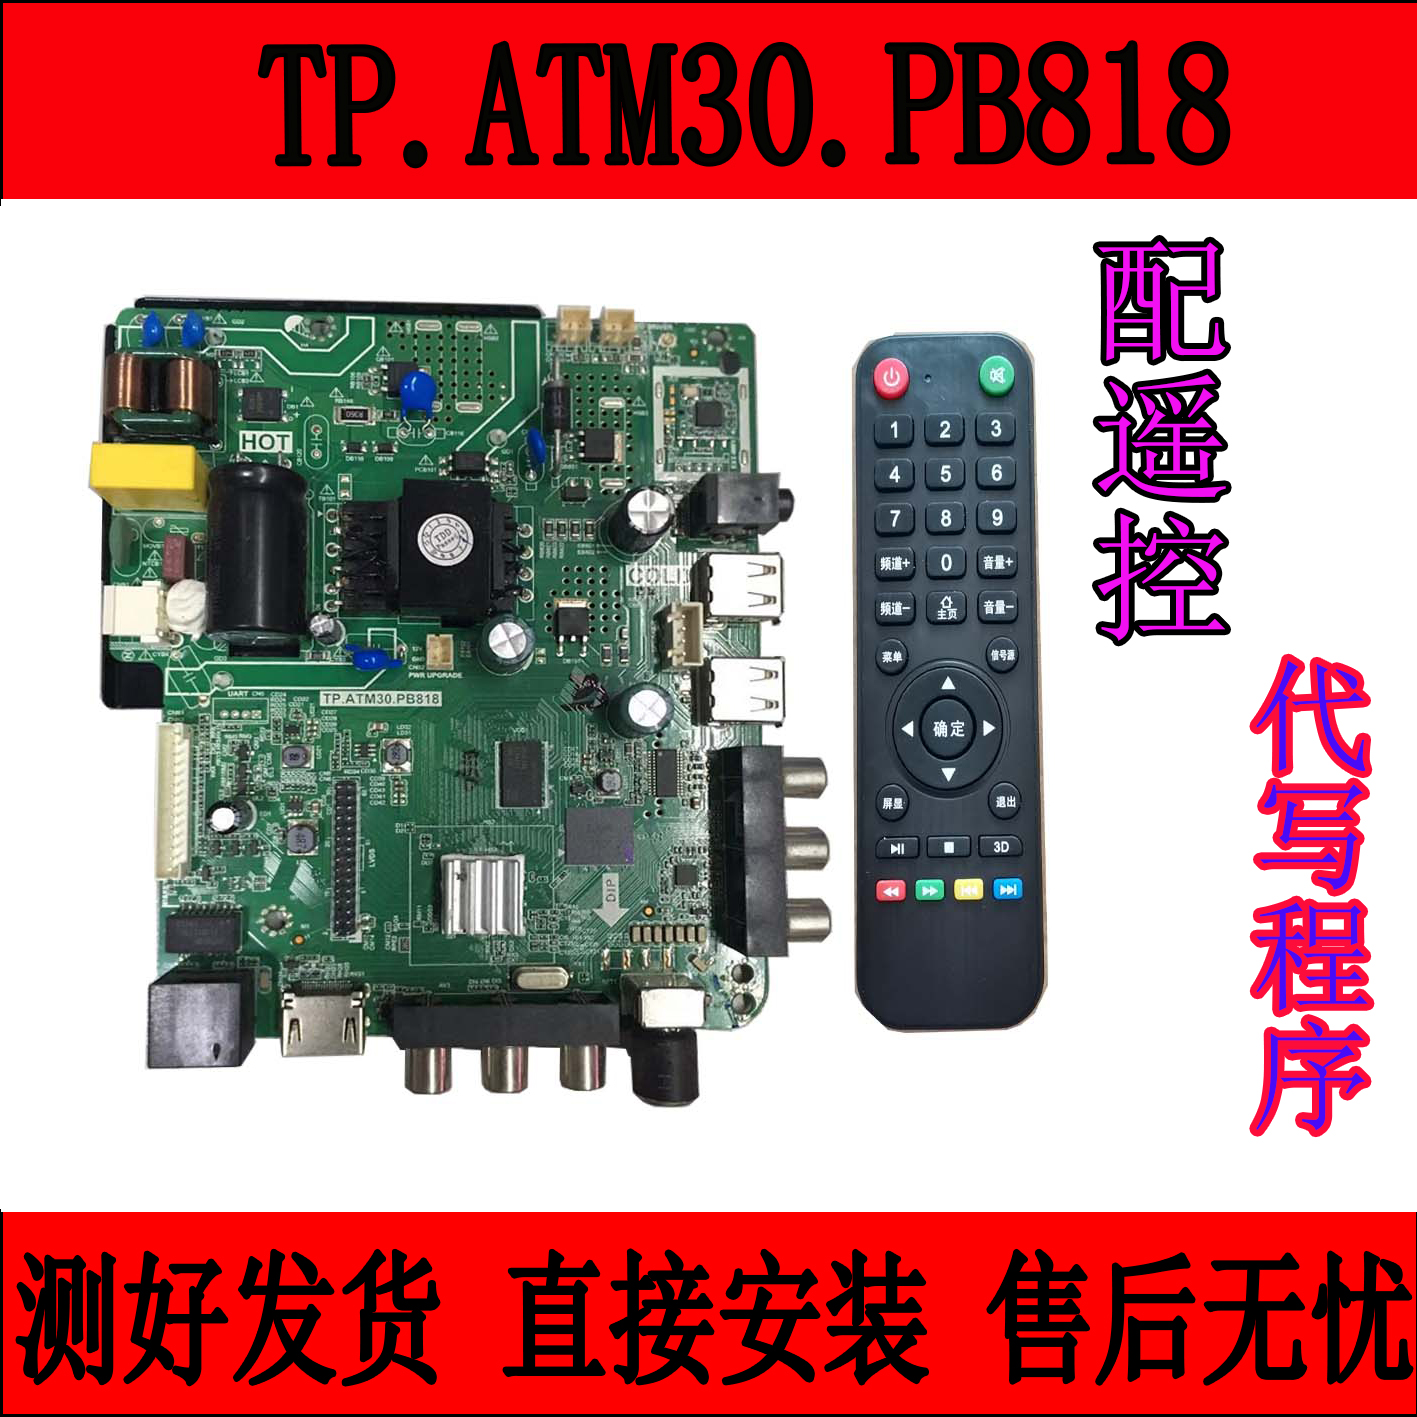 TP.ATM30.PB818网络电视主板